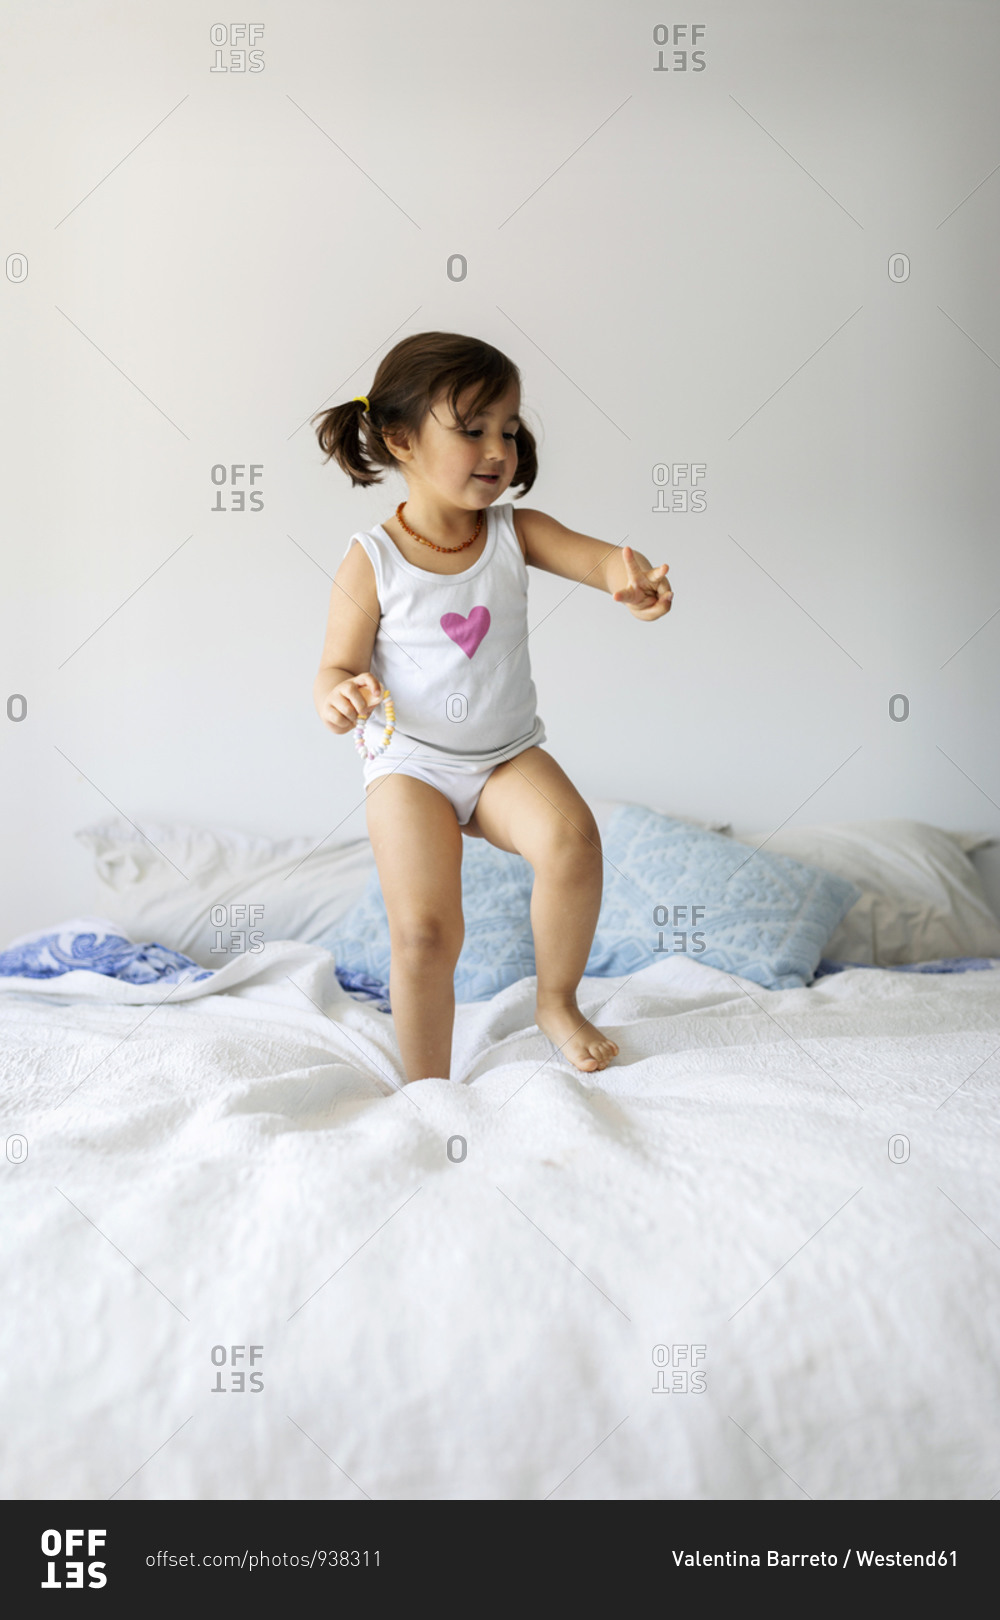 Portrait of little girl in underwear dancing on bed stock photo